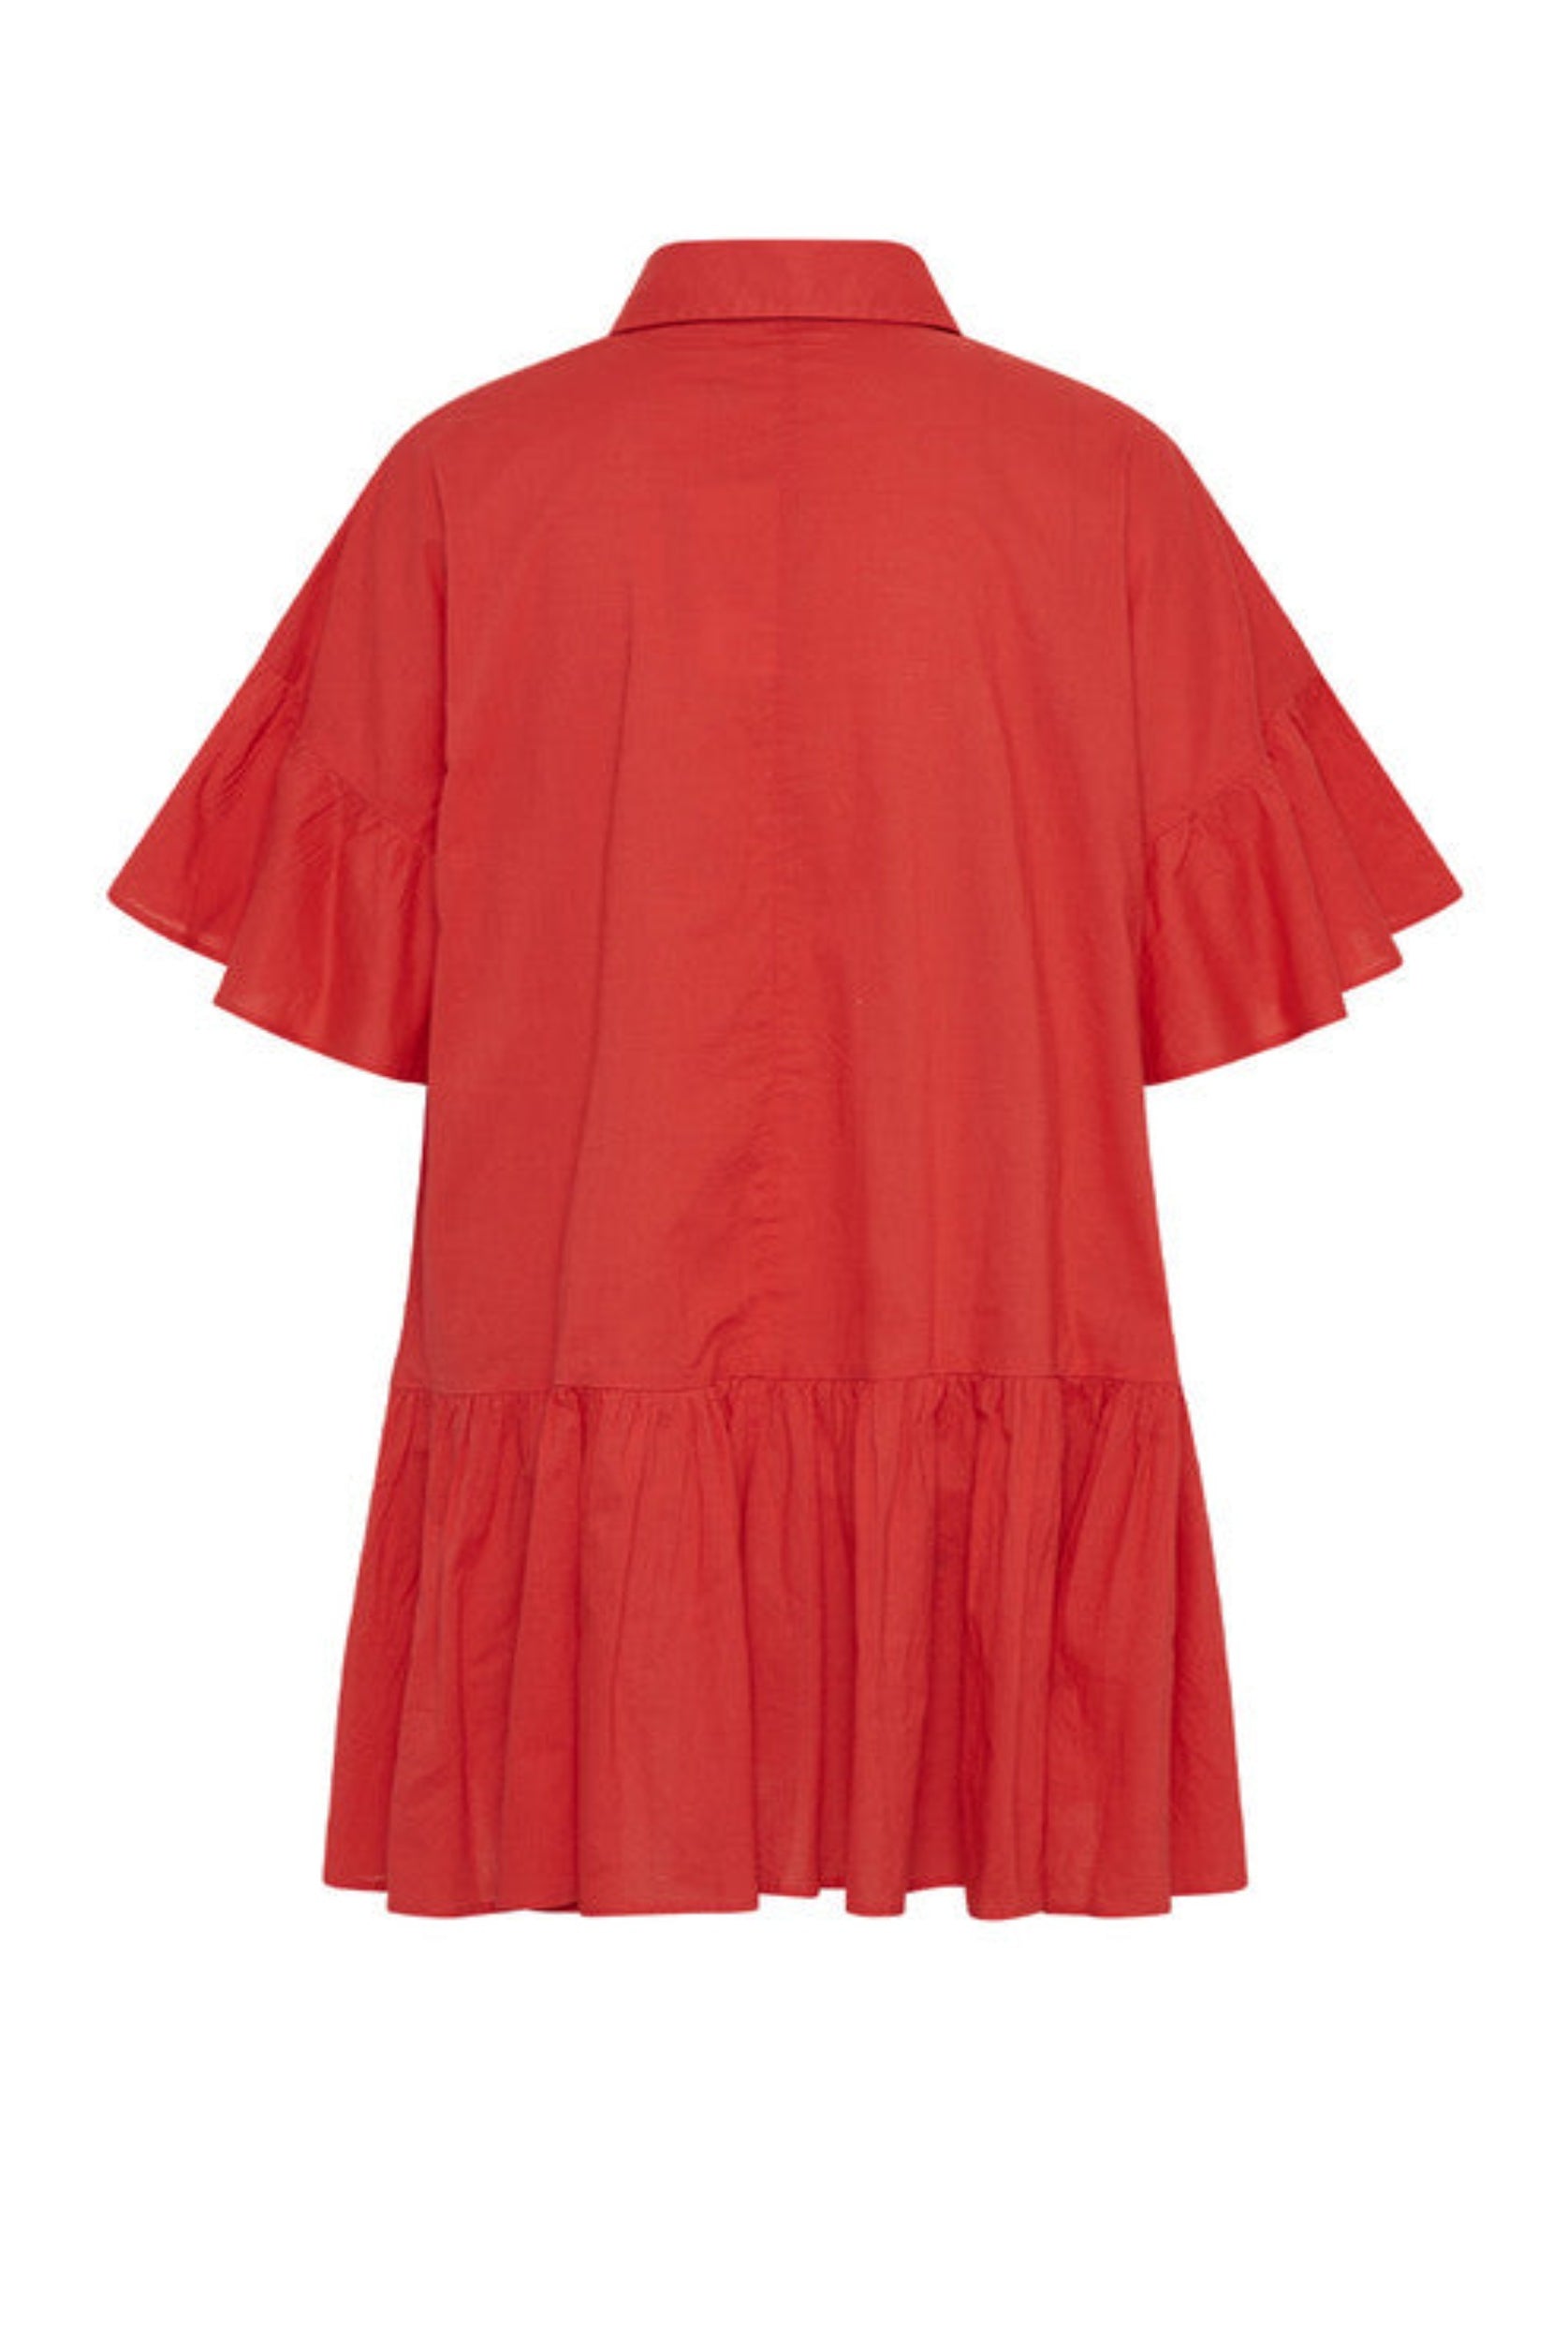 Genoa Dress in Rhubarb